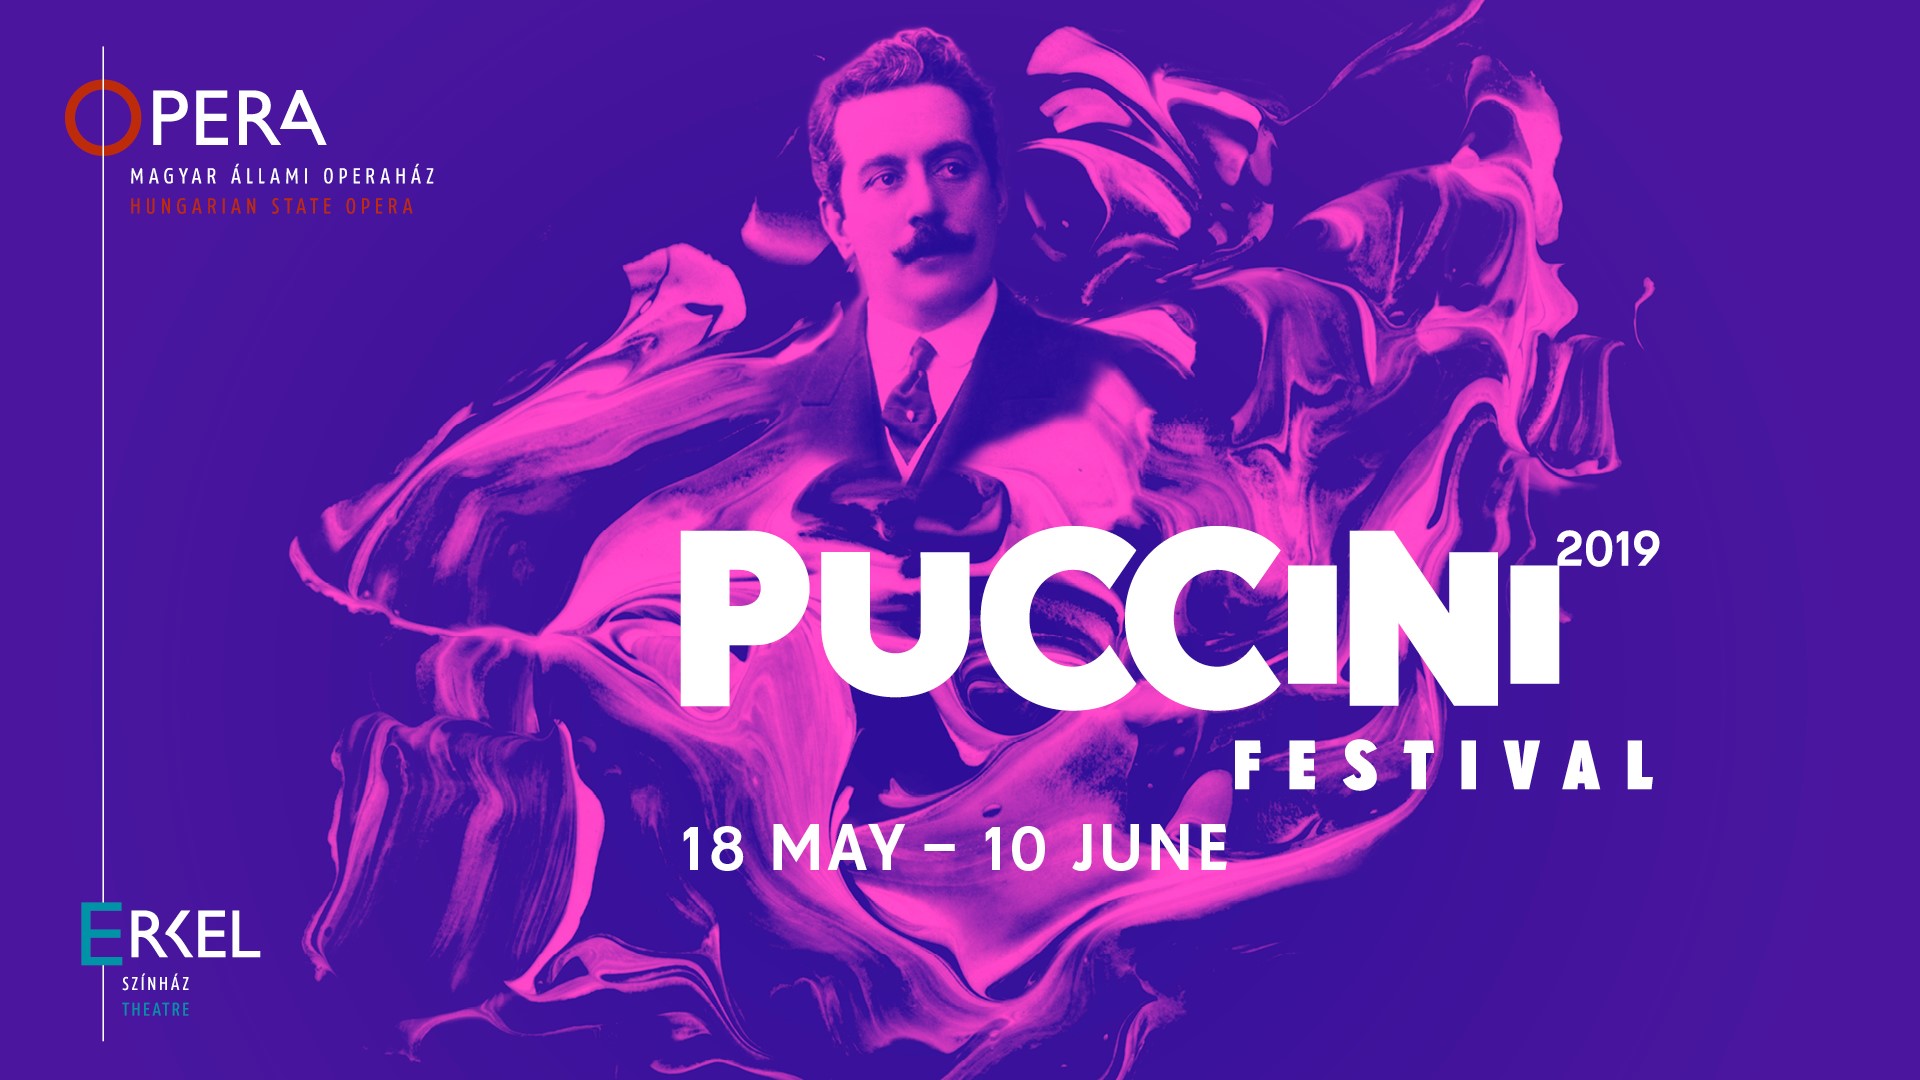 Puccini Festival In Budapest, Until 10 June